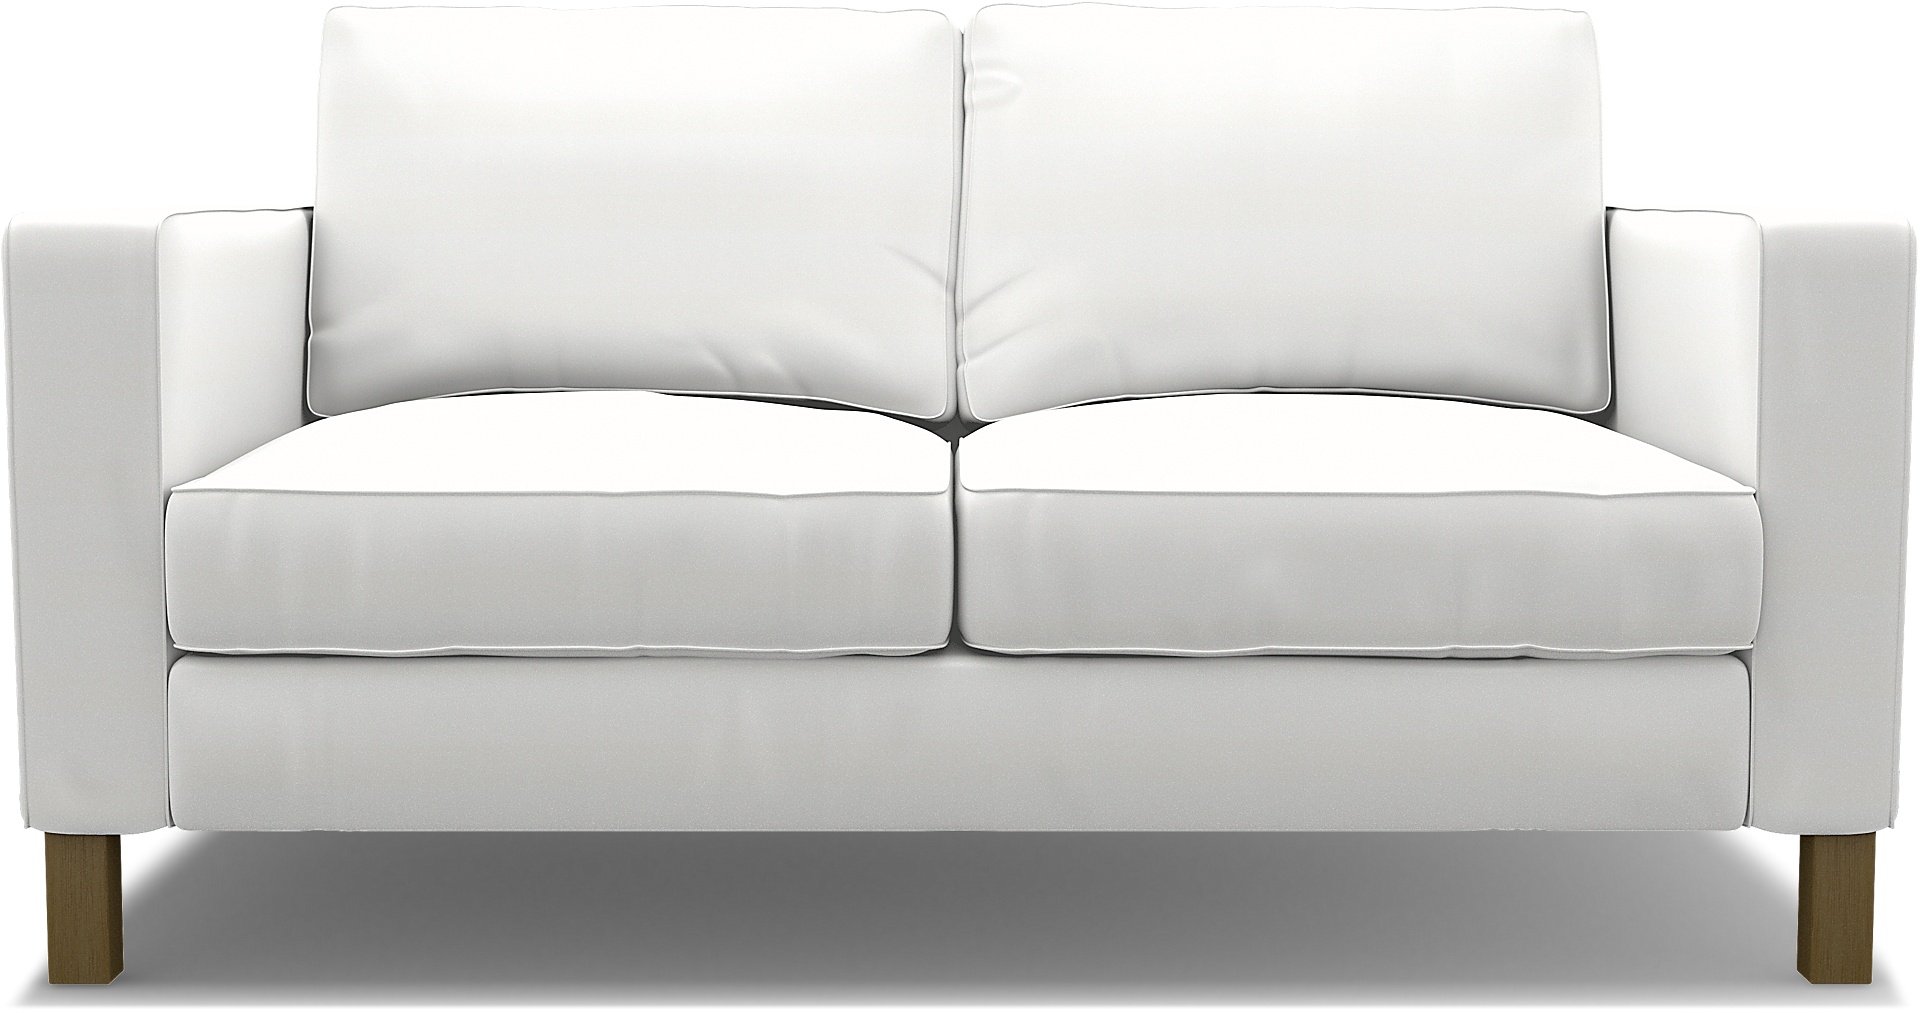 IKEA - Karlstad 2 Seater Sofa Cover, Absolute White, Linen - Bemz